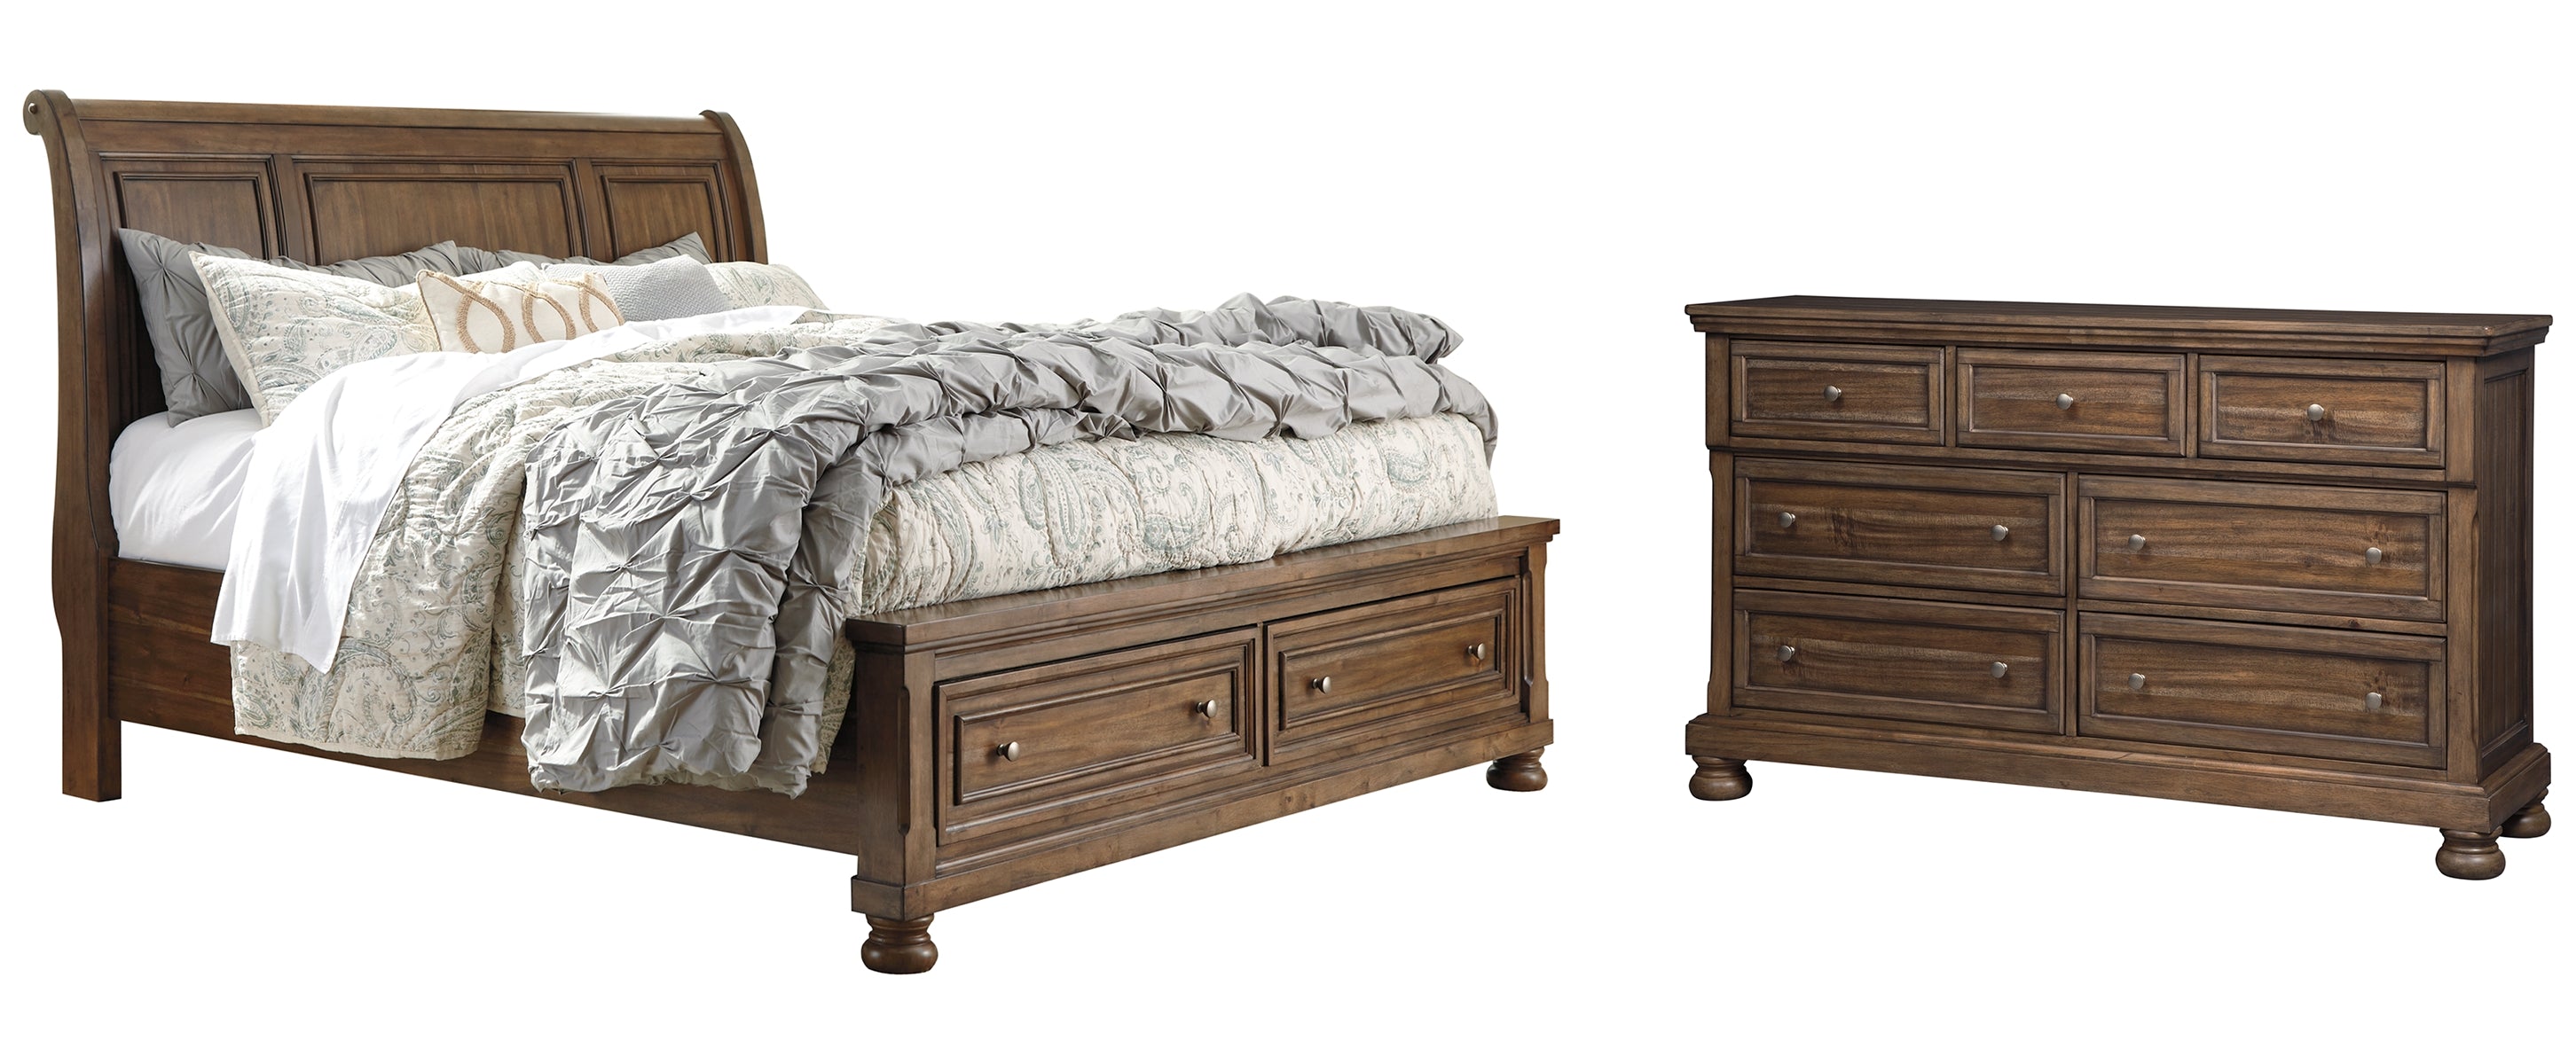 Flynnter Queen Sleigh Bed with 2 Storage Drawers with Dresser with Dresser